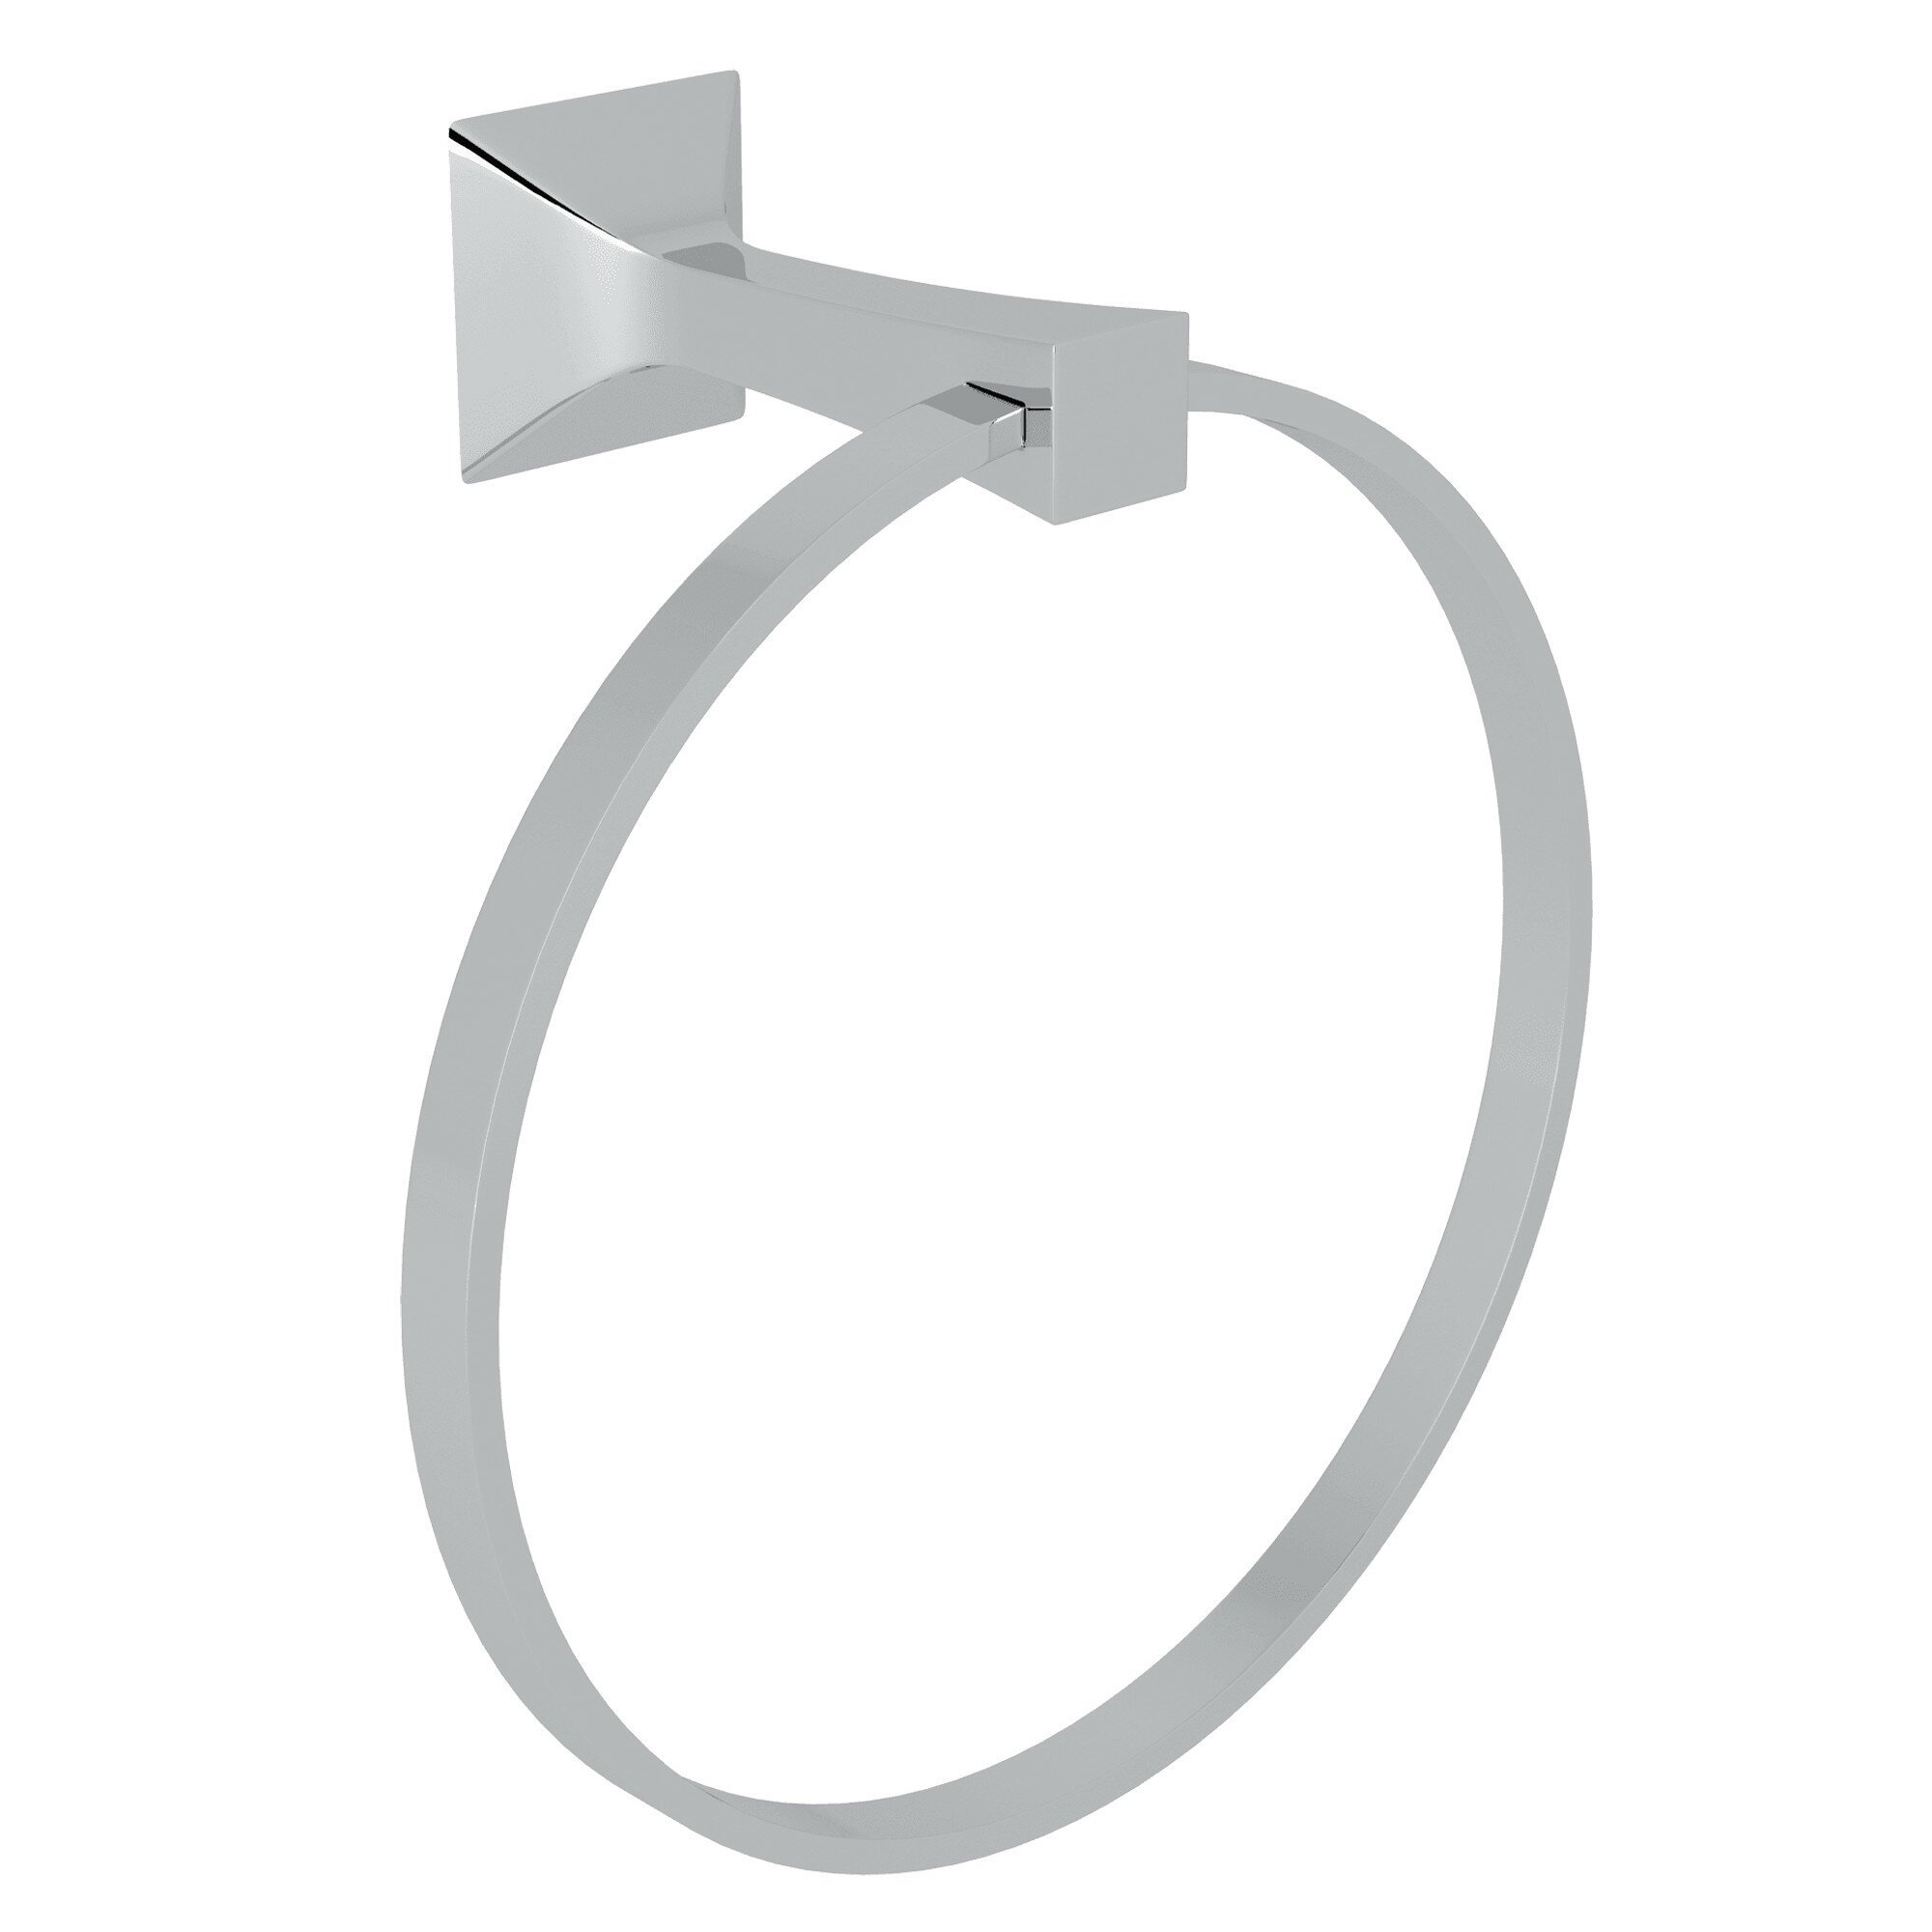 Brushed Satin Nickel Towel Ring Bathroom Accessory Madison Design